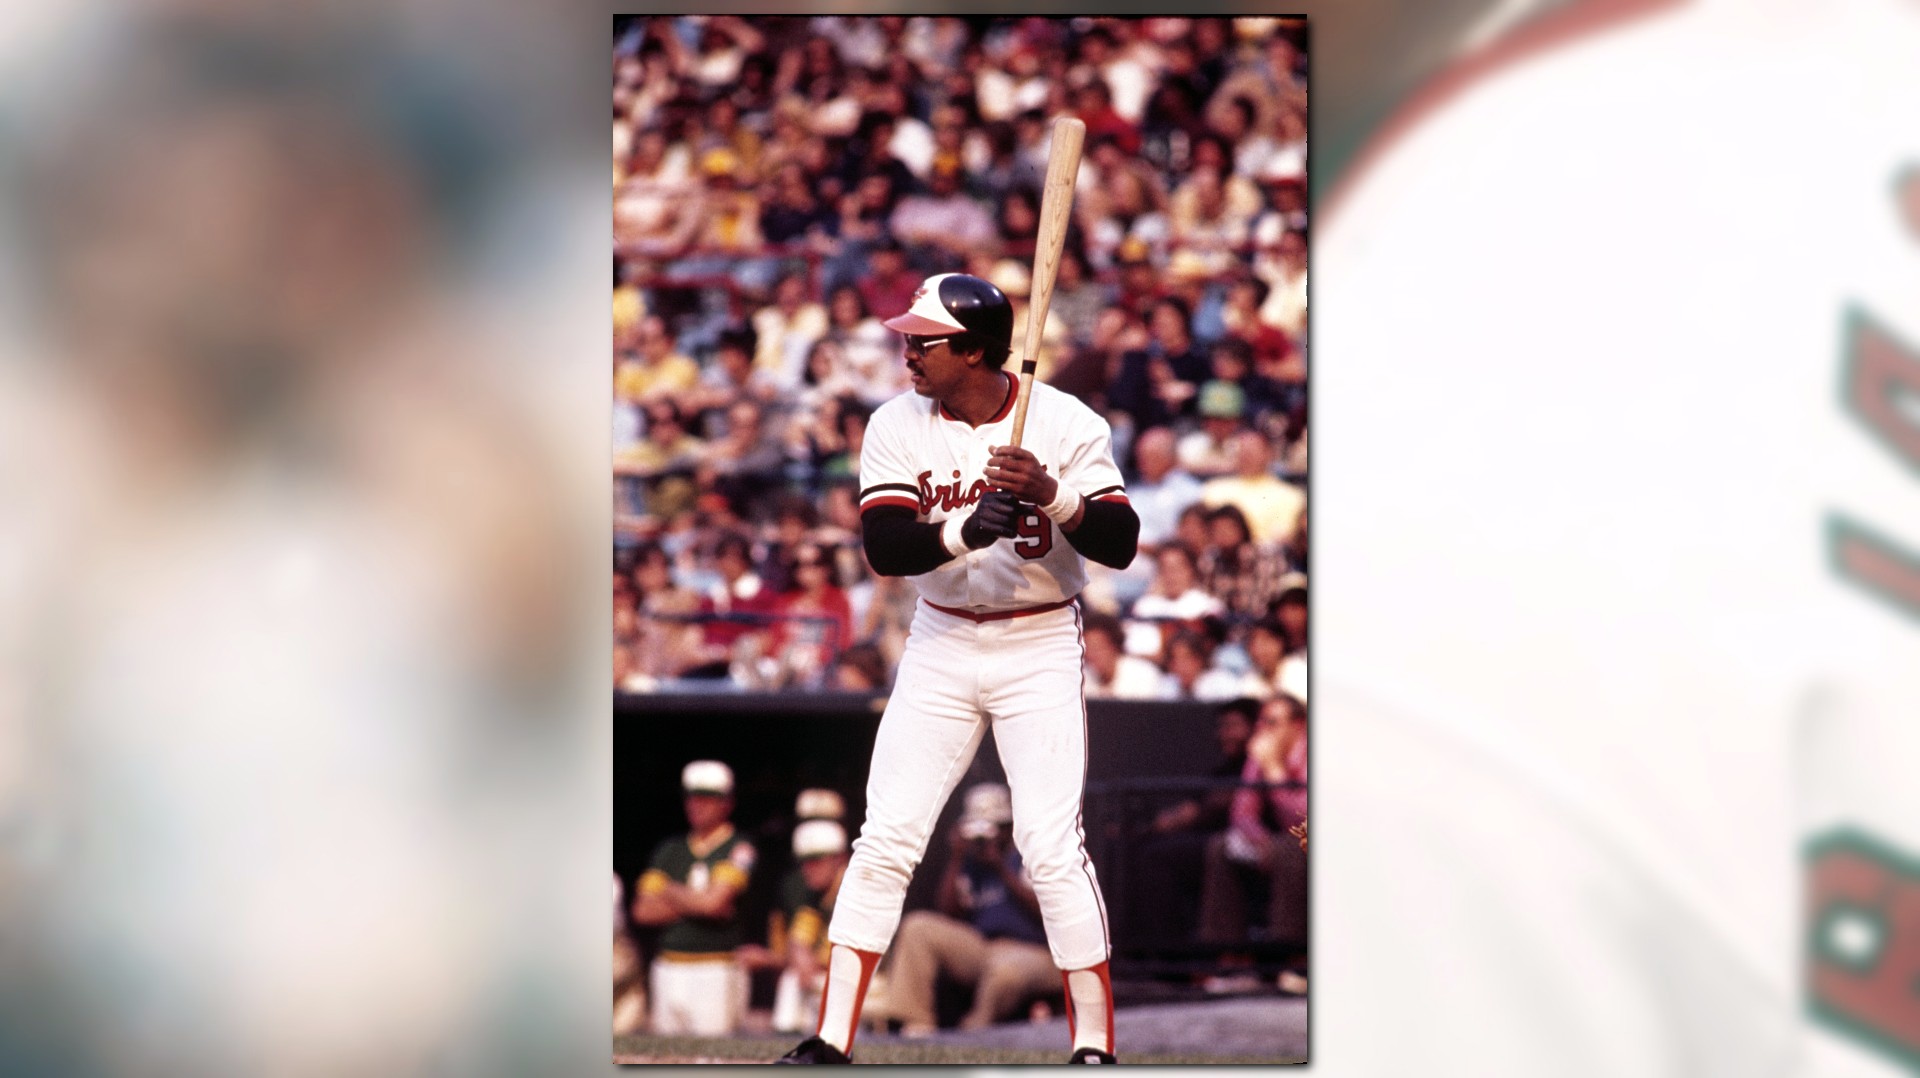 40th anniversary of Reggie Jackson as an Oriole